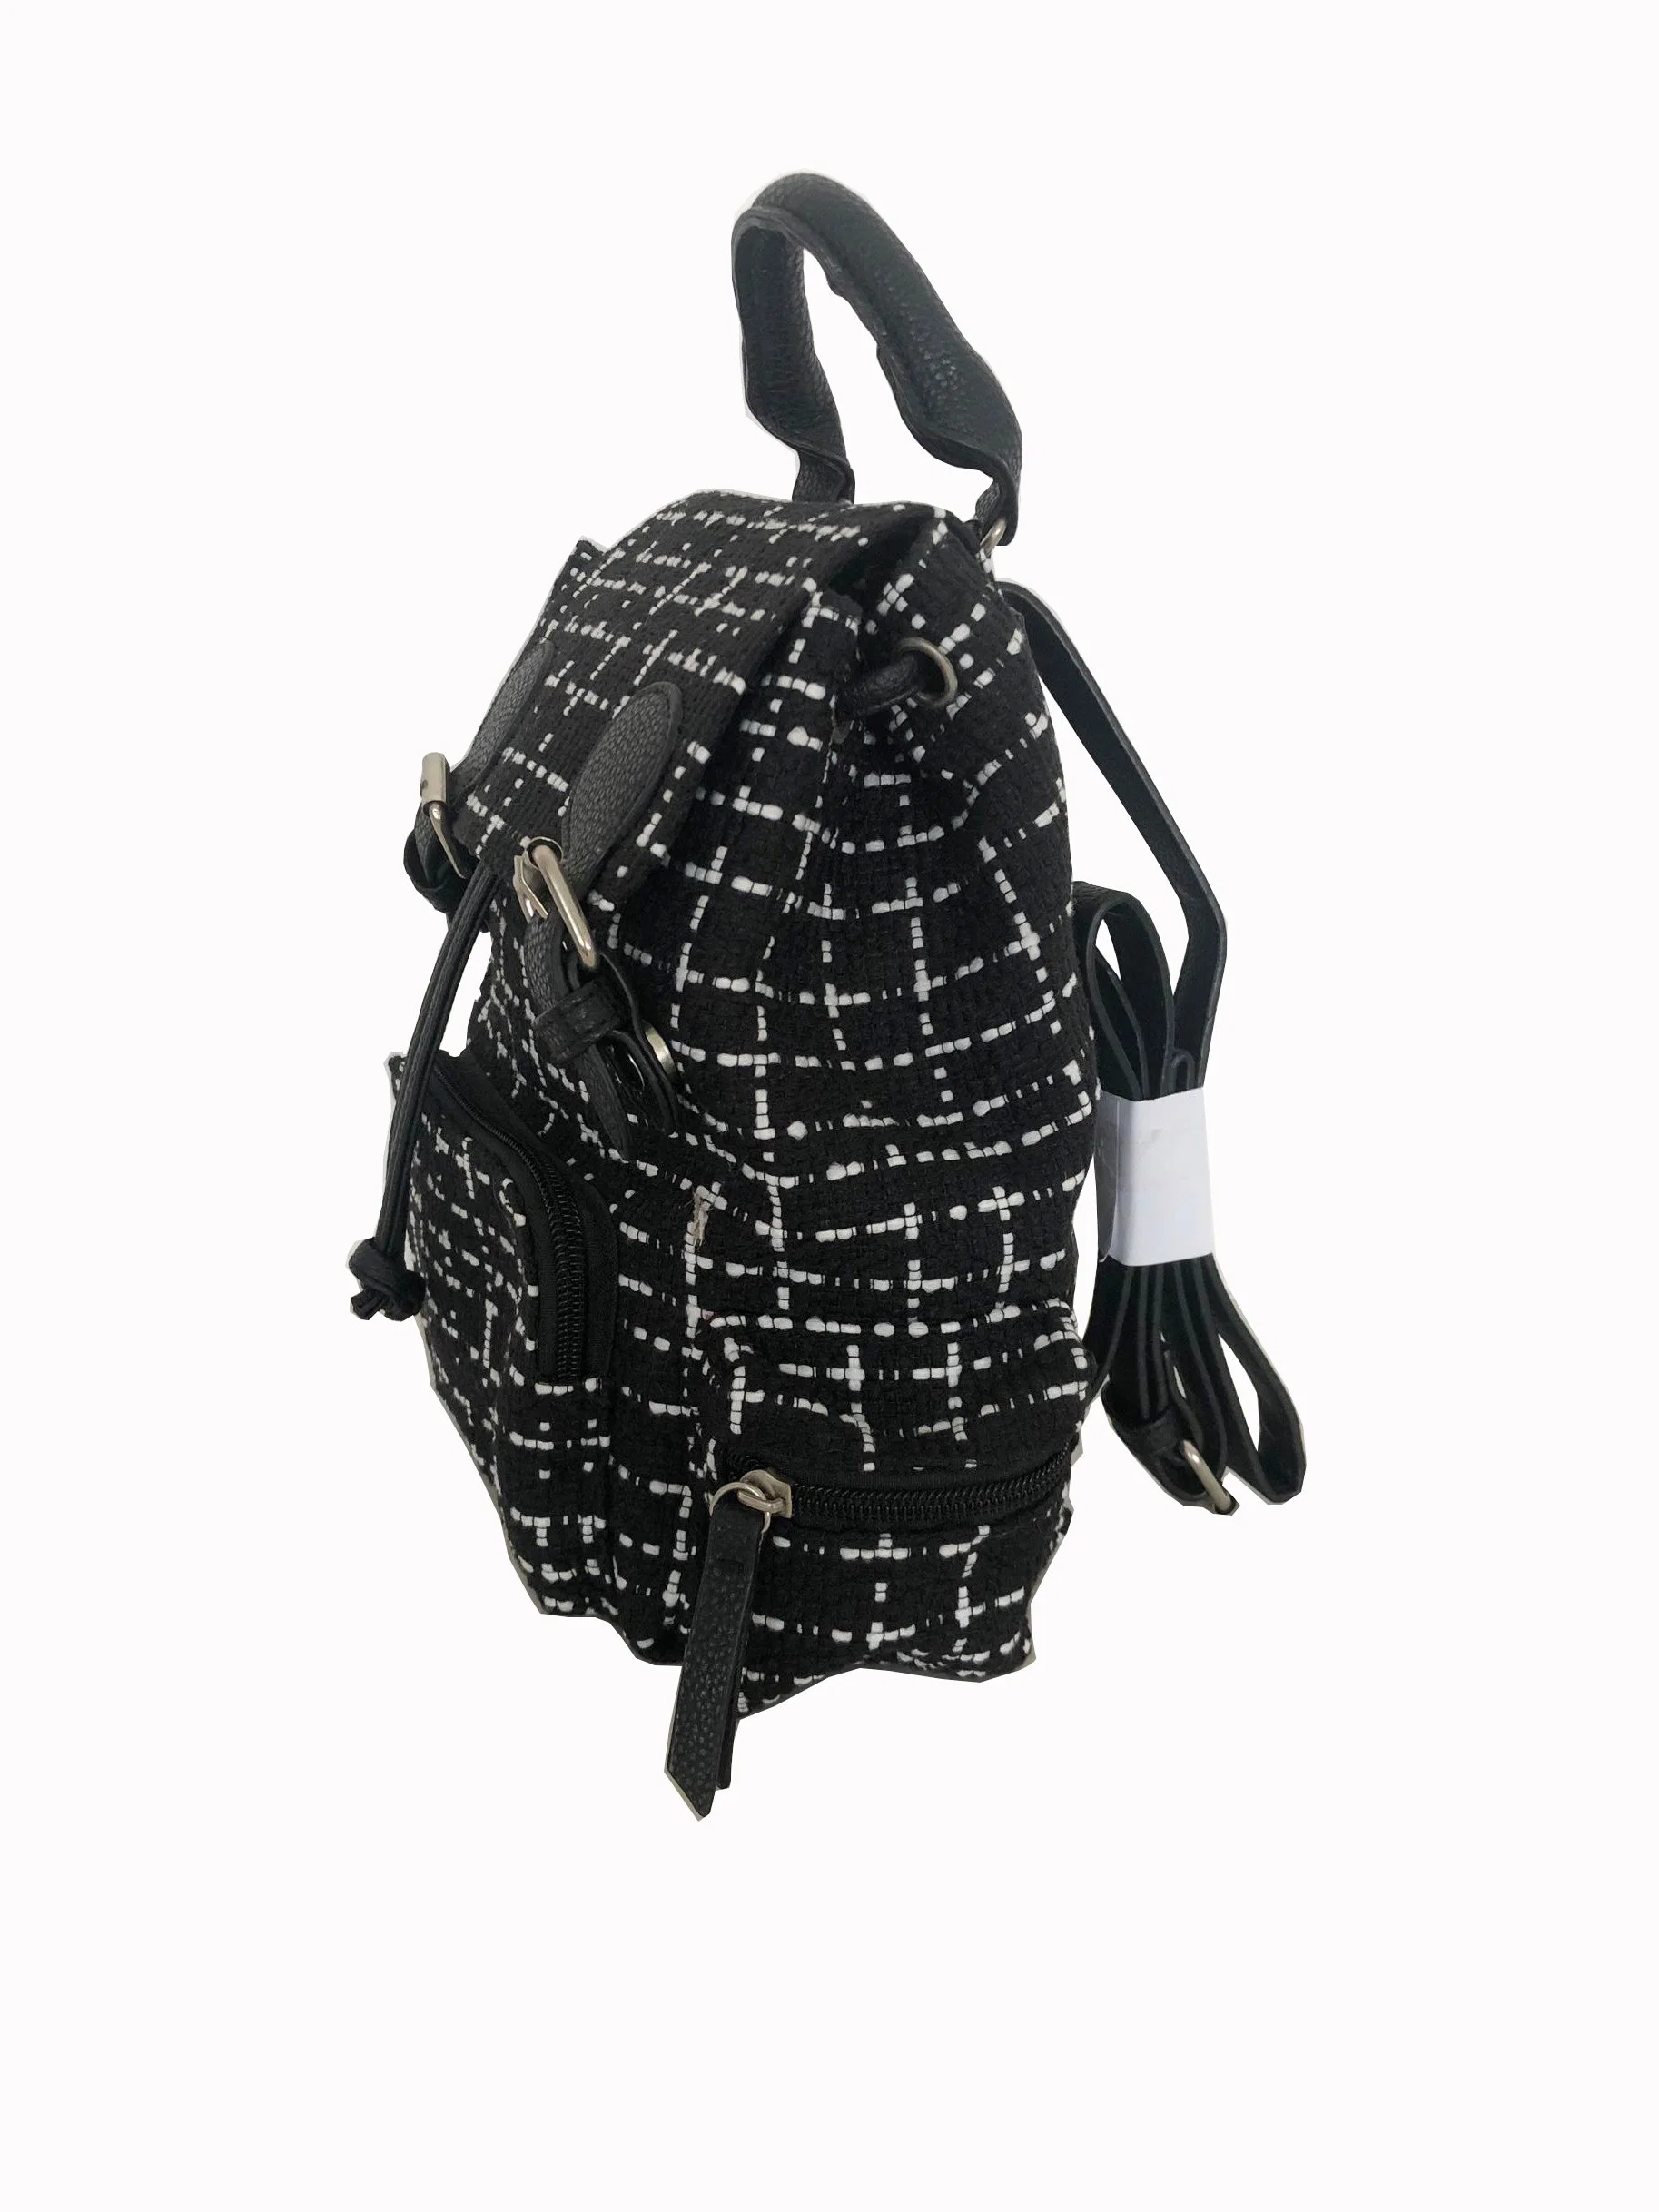 Fashion Girls Canvas Backpacks Women Outdoor School Bags